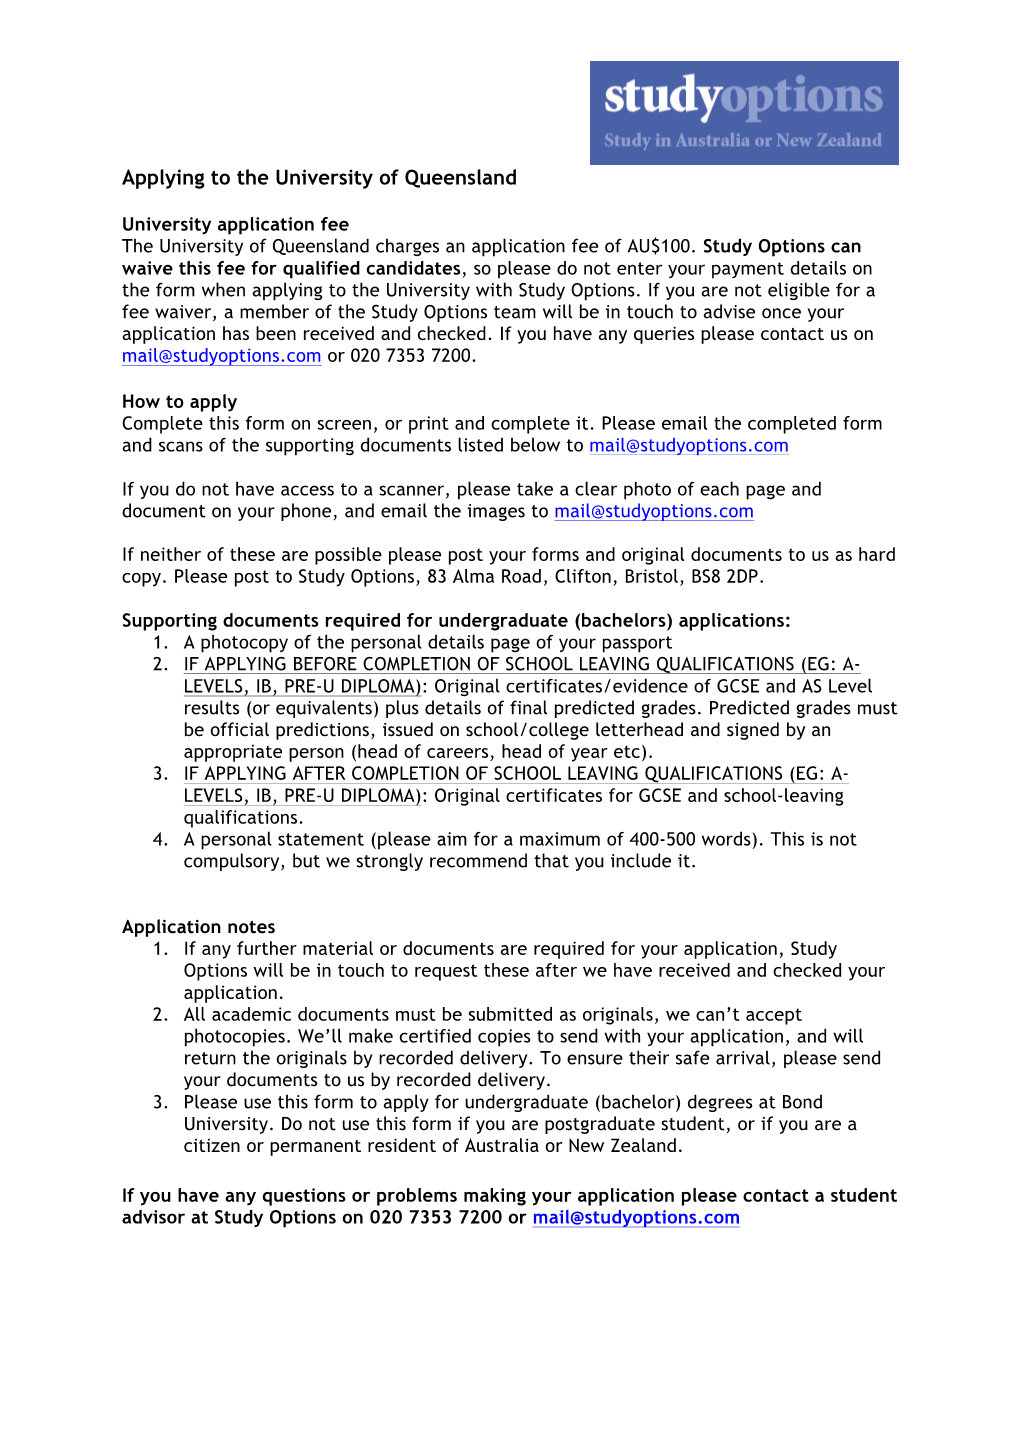 University of Queensland Undergraduate Application Form